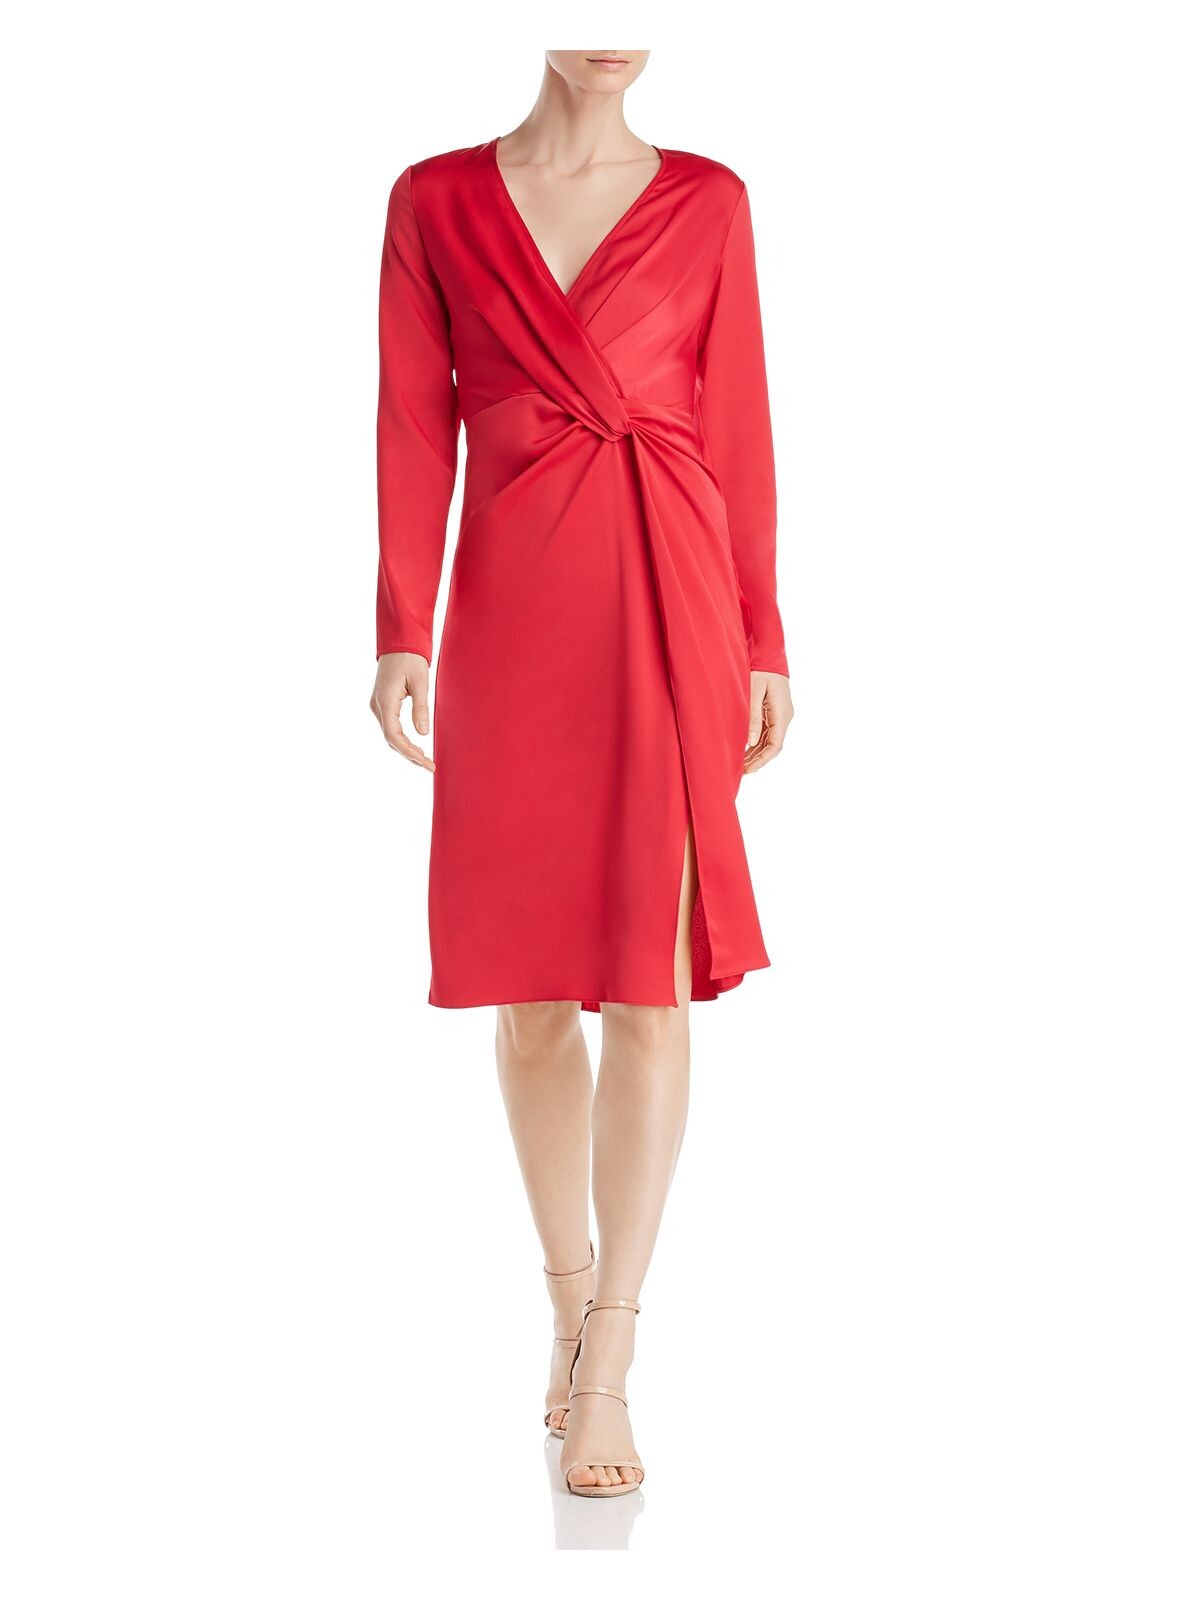 Jaygodfrey Womens Red Long Sleeve V Neck Above The Knee Evening Dress 2